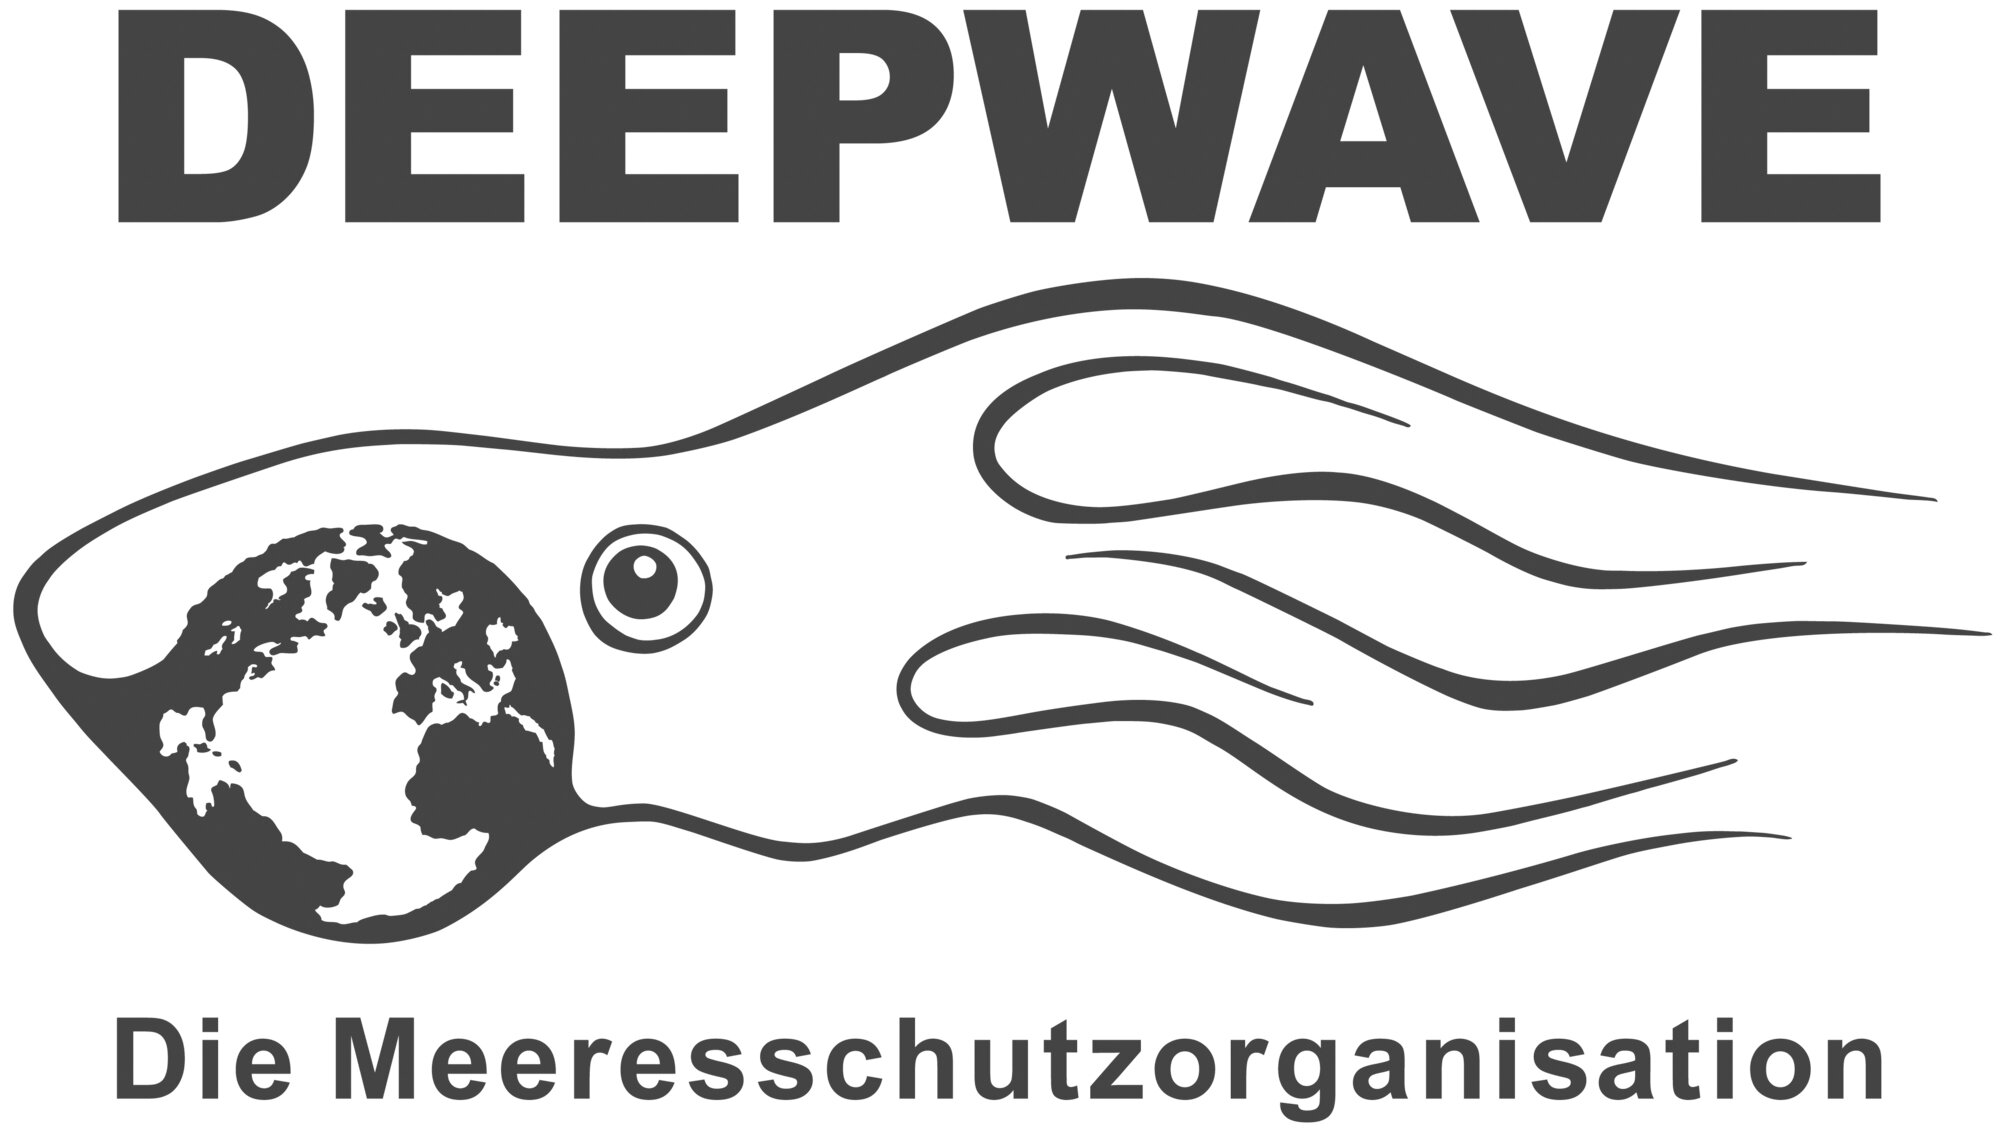 DEEPWAVE Logo.jpg